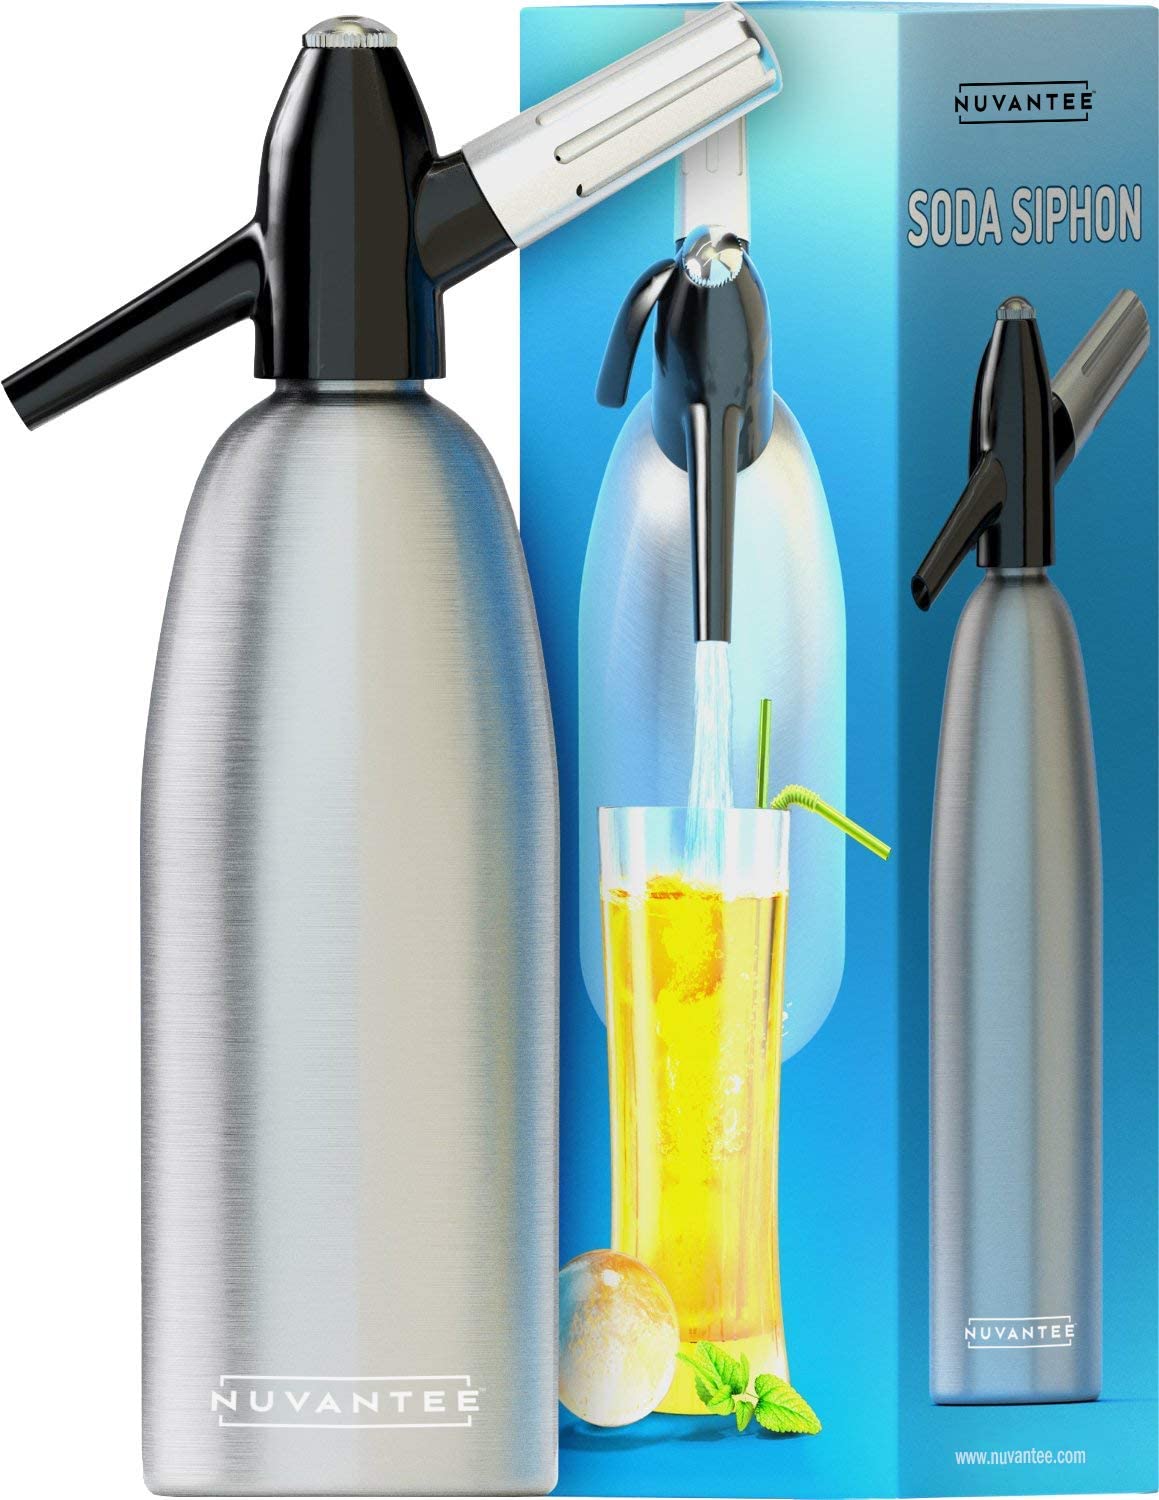 Nuvantee Soda Siphon - Ultimate sparkling Soda Maker